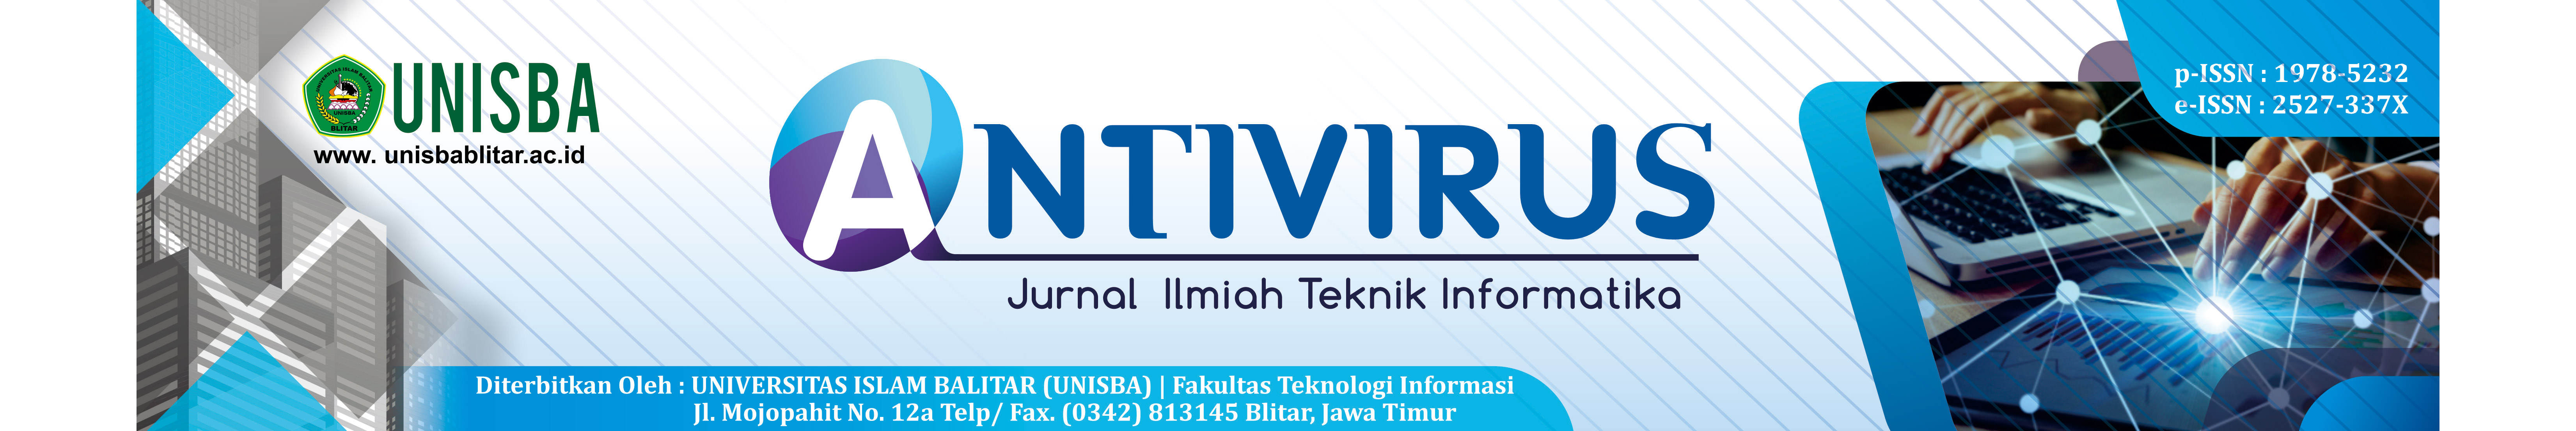 Antivirus : Jurnal Ilmiah Teknik Informatika